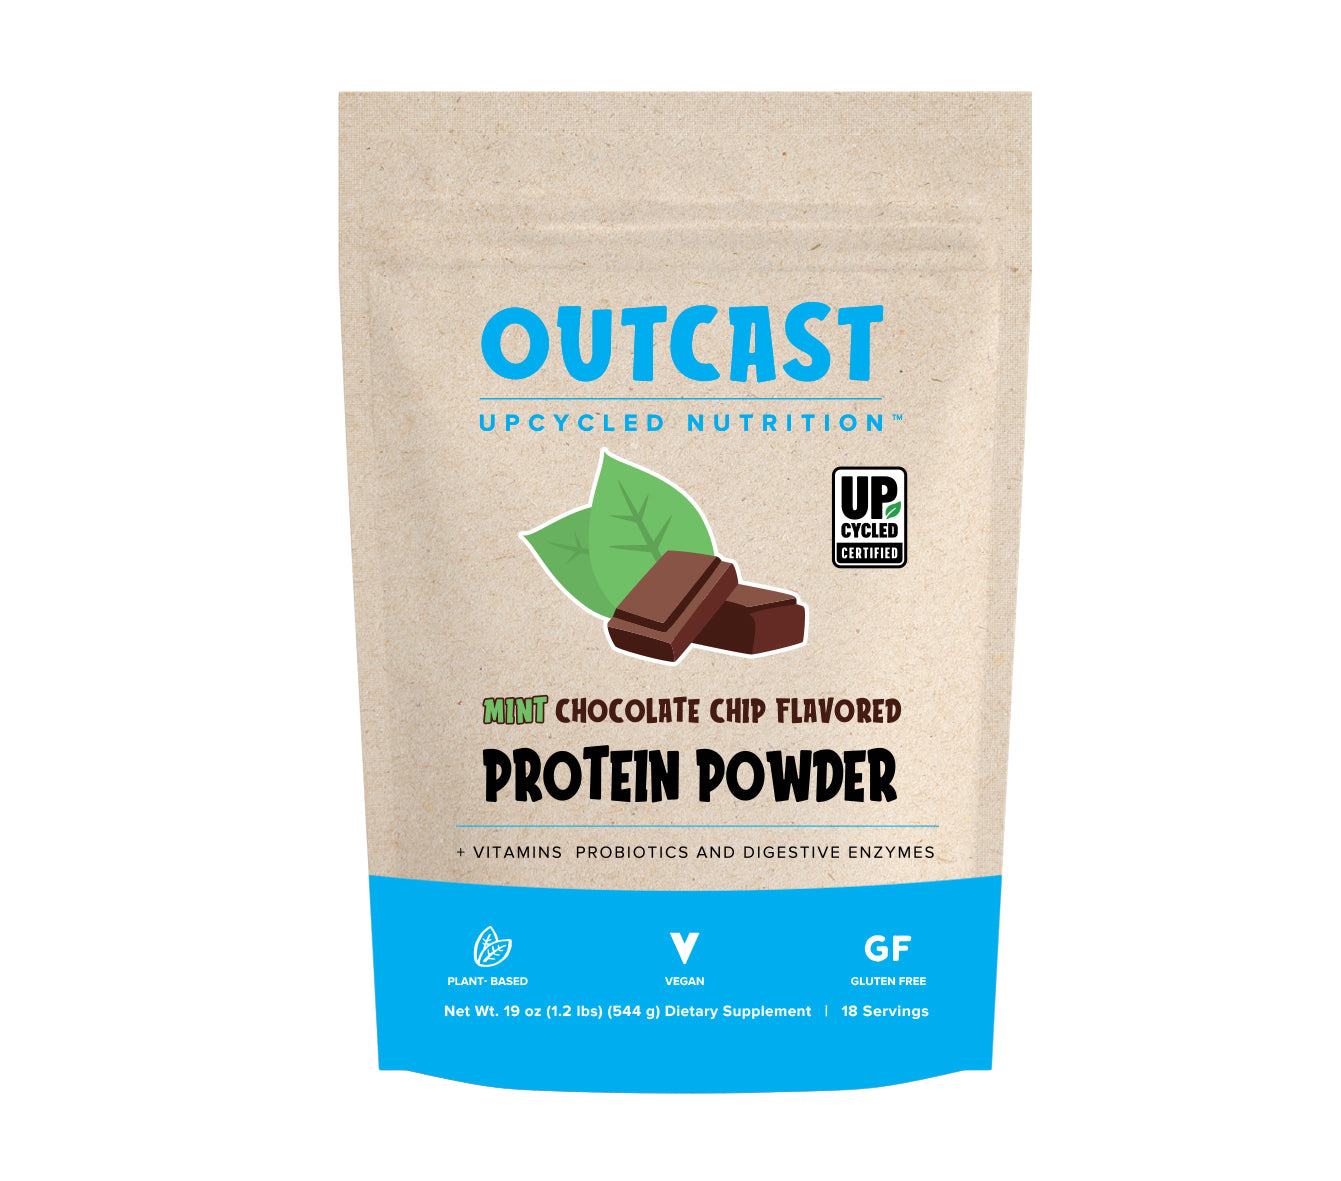 Mint Chocolate Chip Protein Powder 1.2LB